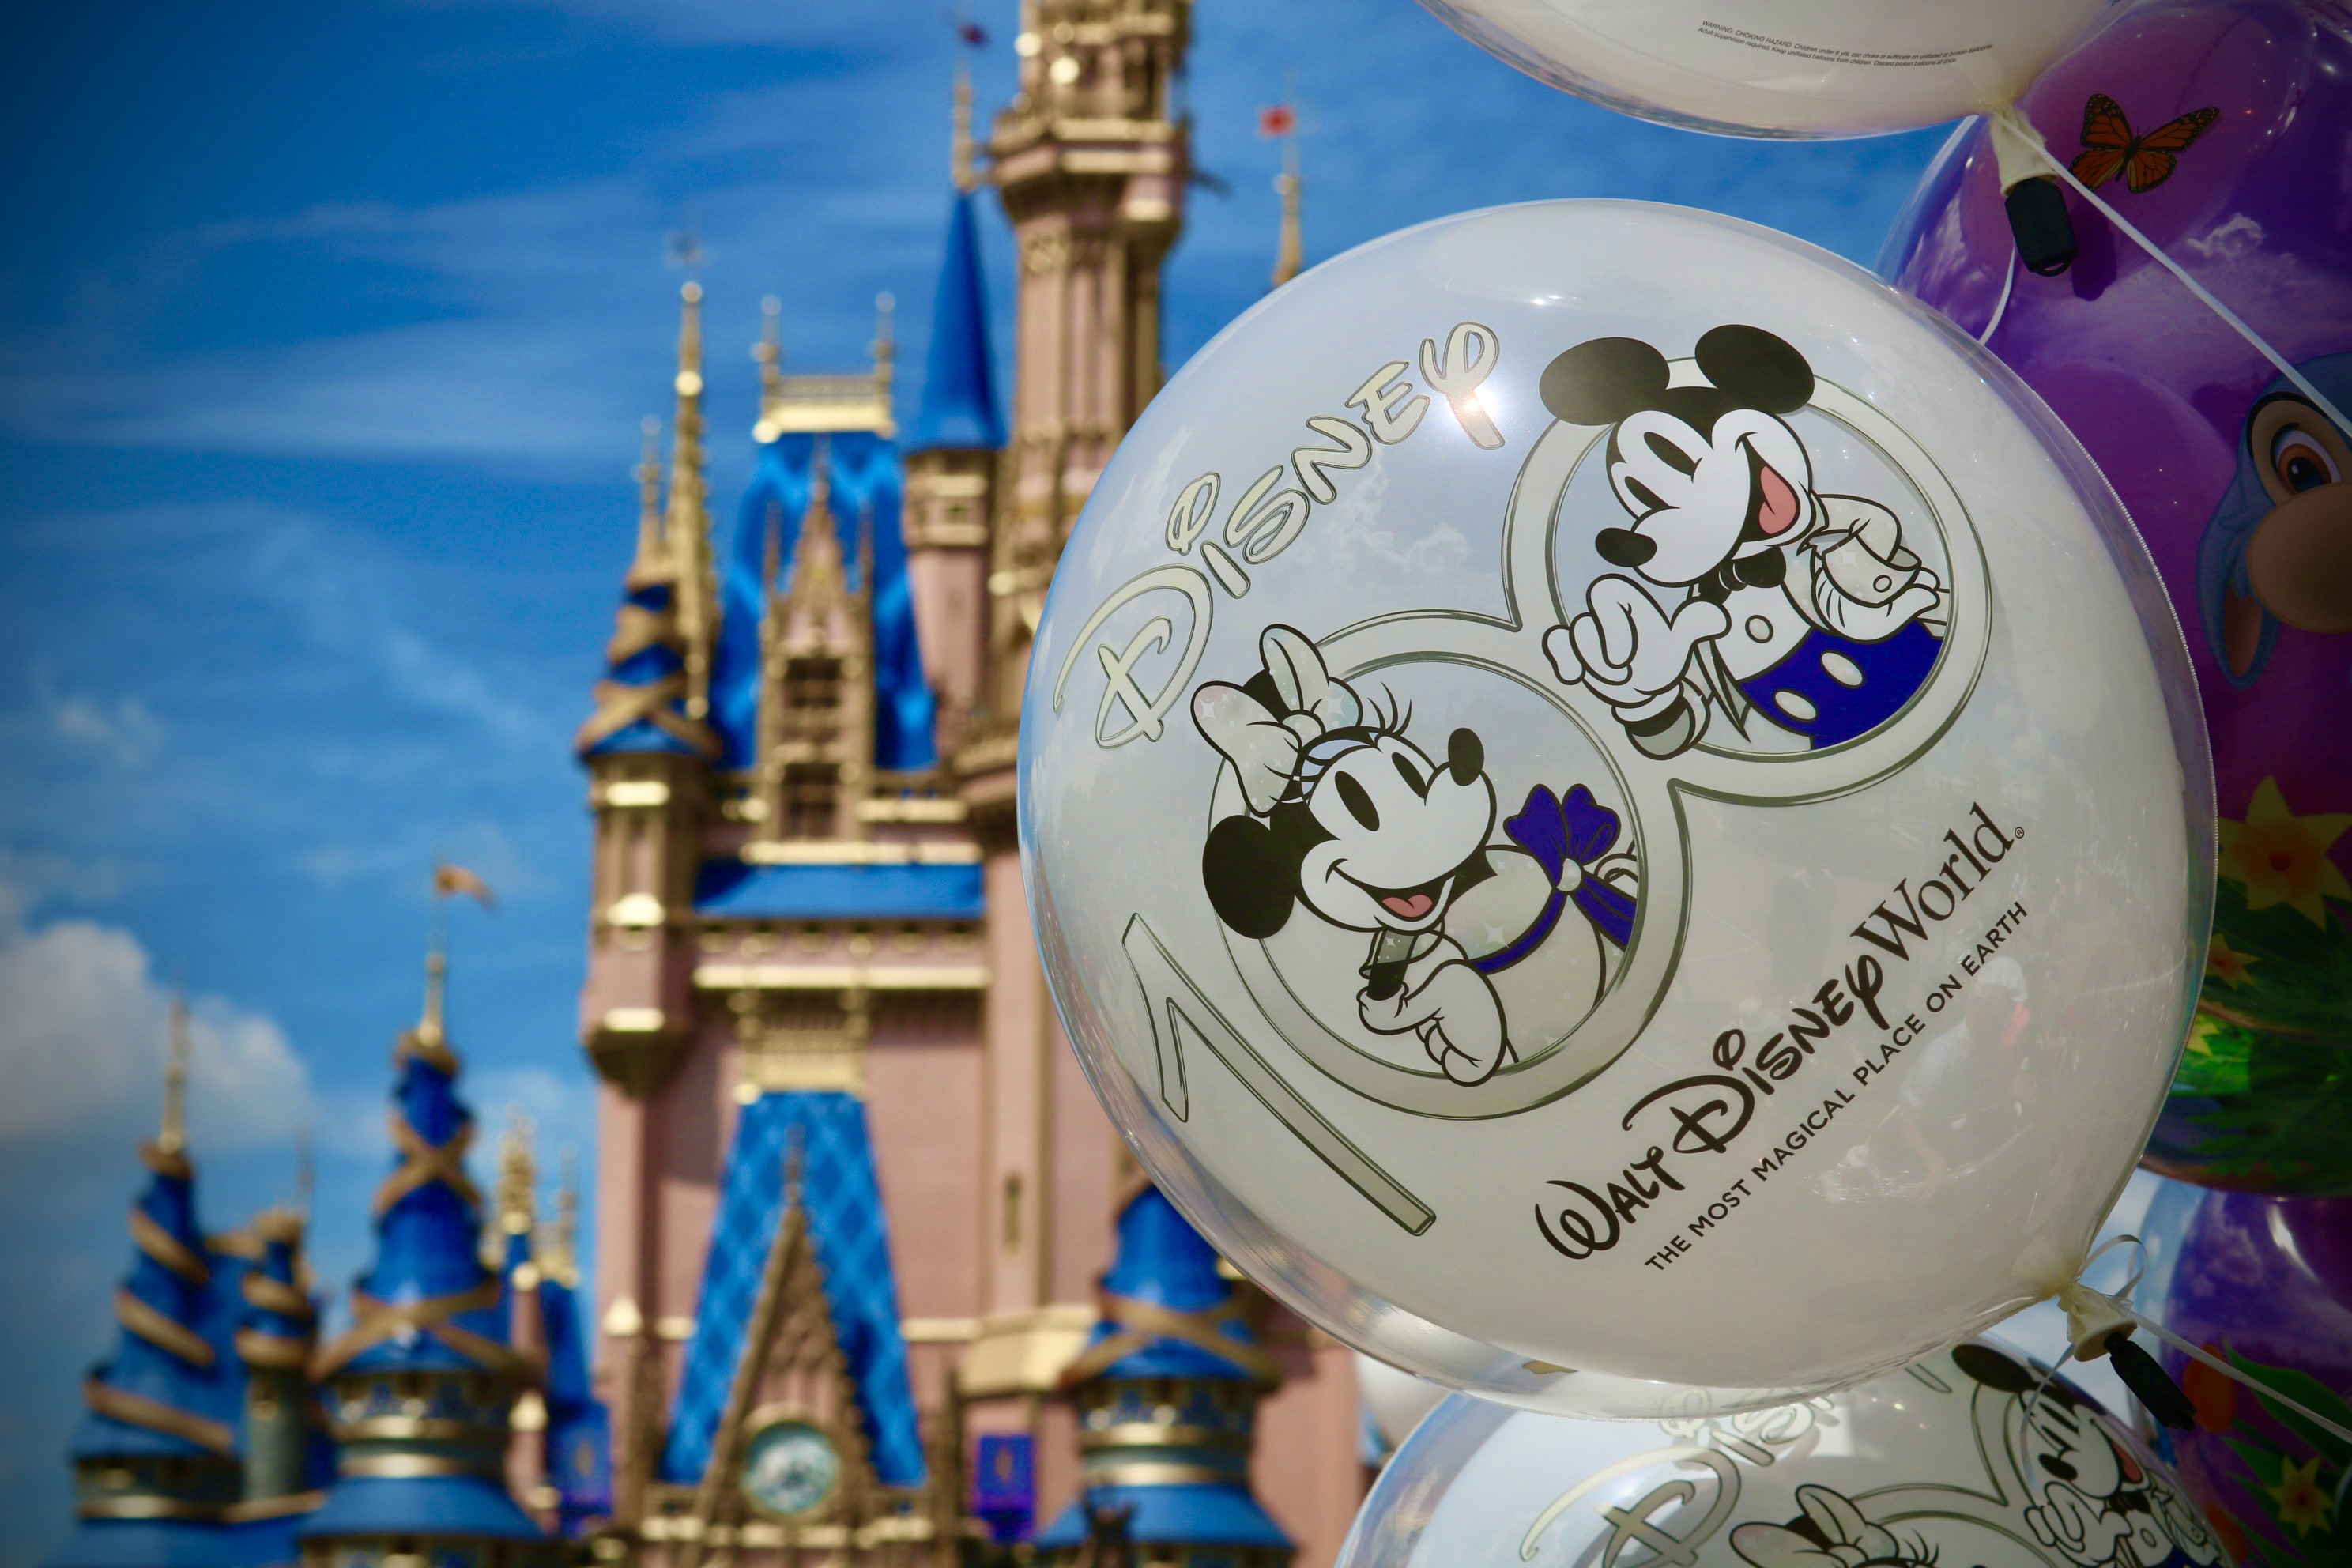 6 Ways to Celebrate Disney100 at Walt Disney World Resort